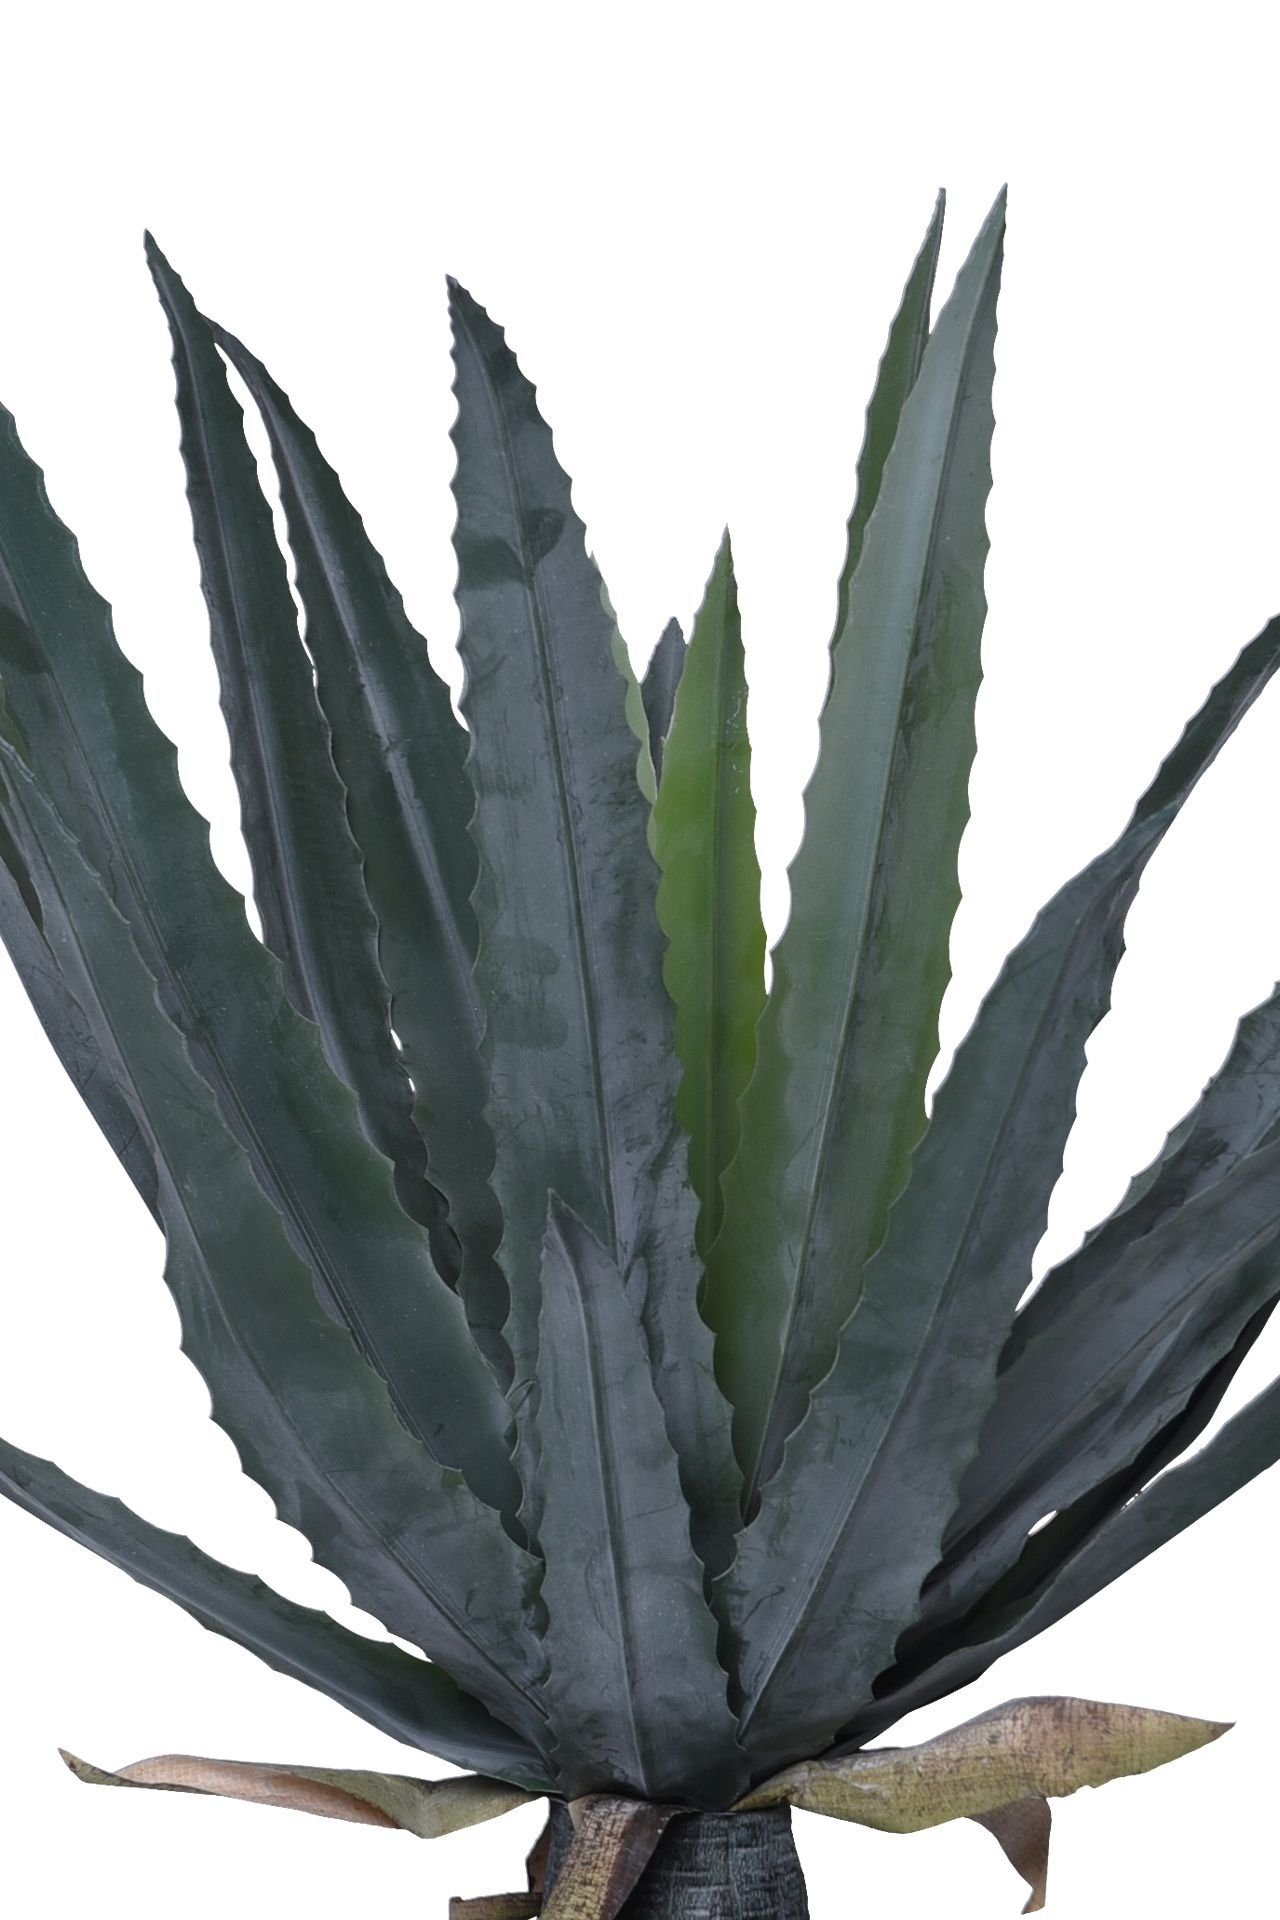 Kunstpflanze Kunstpflanze 67 cm cm, VIVANNO, künstliche Höhe Topf AGAVO 65x67 - Kunststoff Agave im